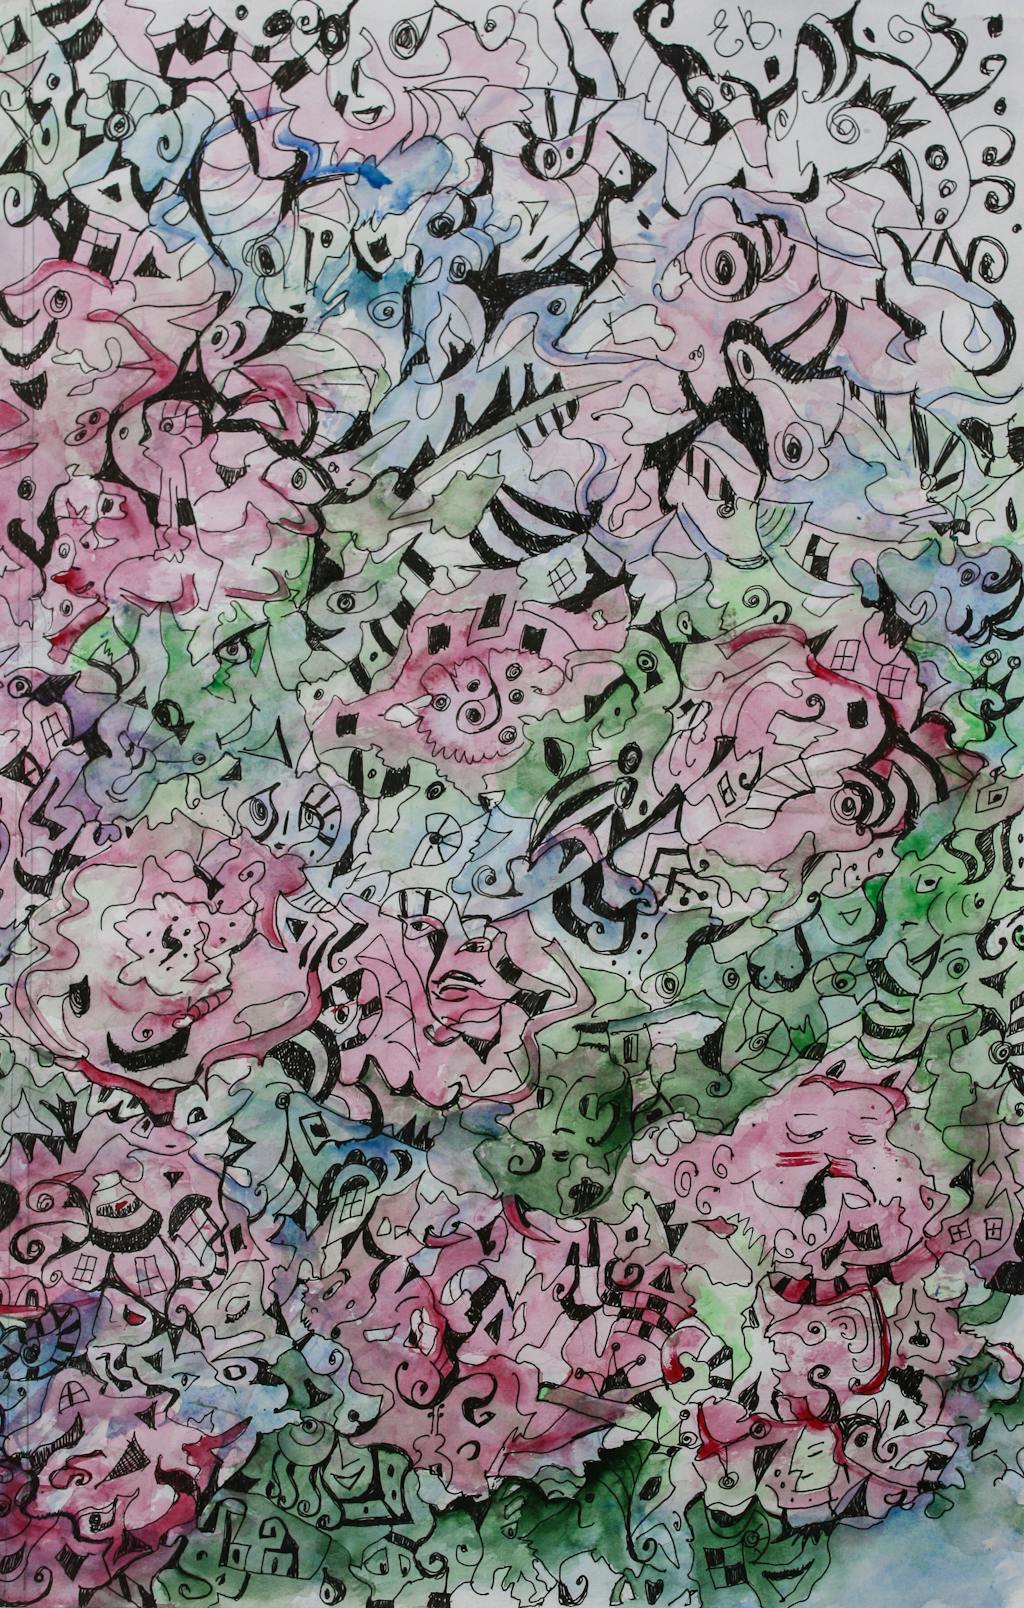 Painting "Petunias", painted by Elena Birkenwald in 2009